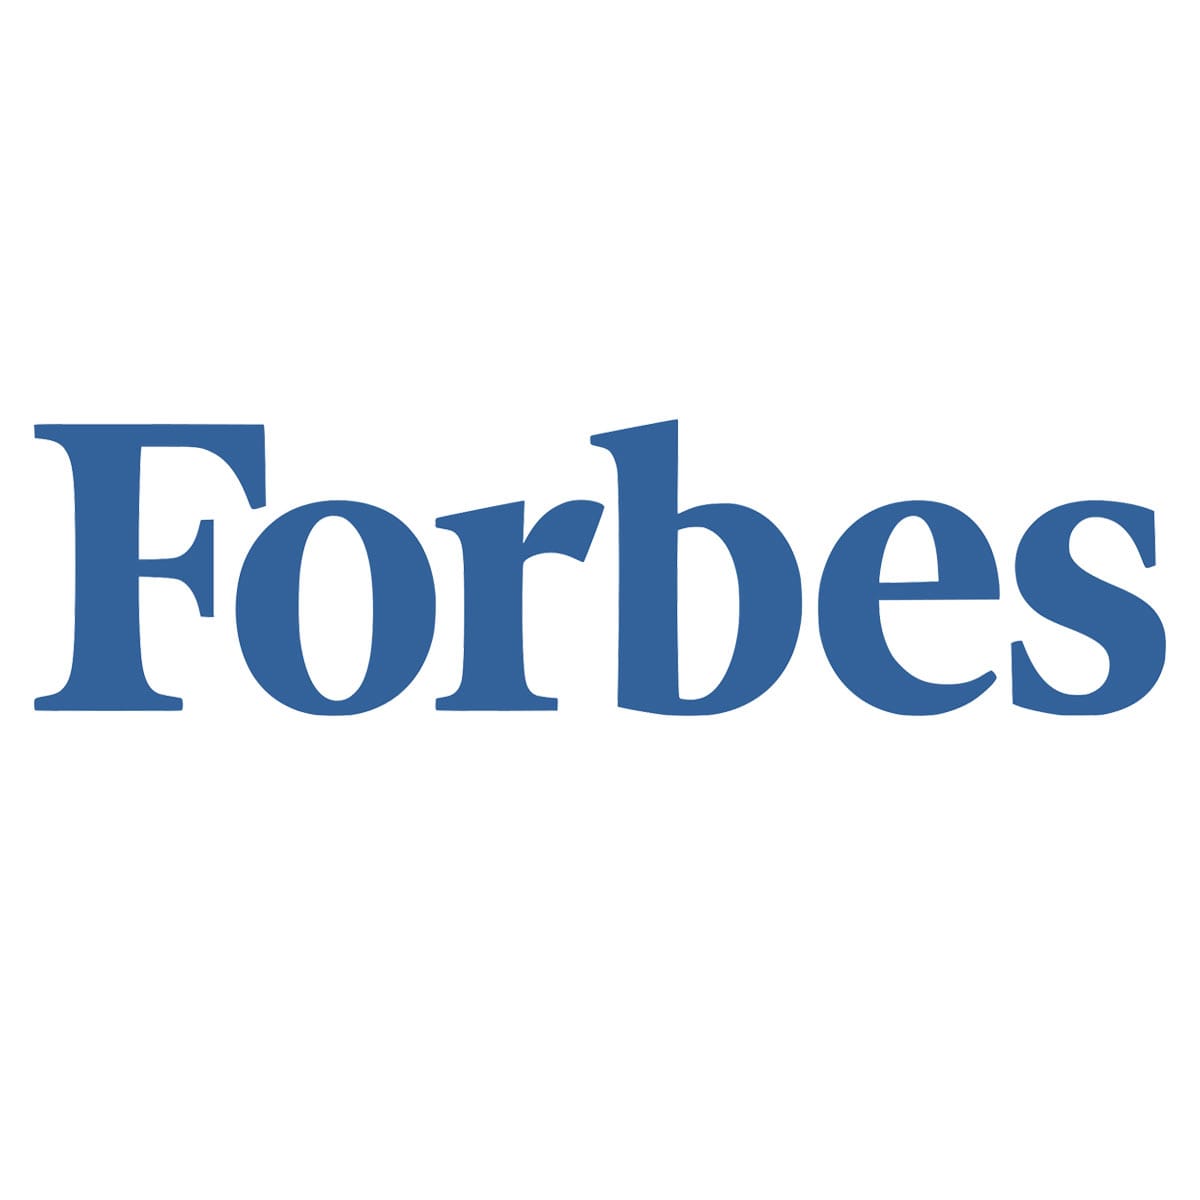 Forbes Magazine Online 2017